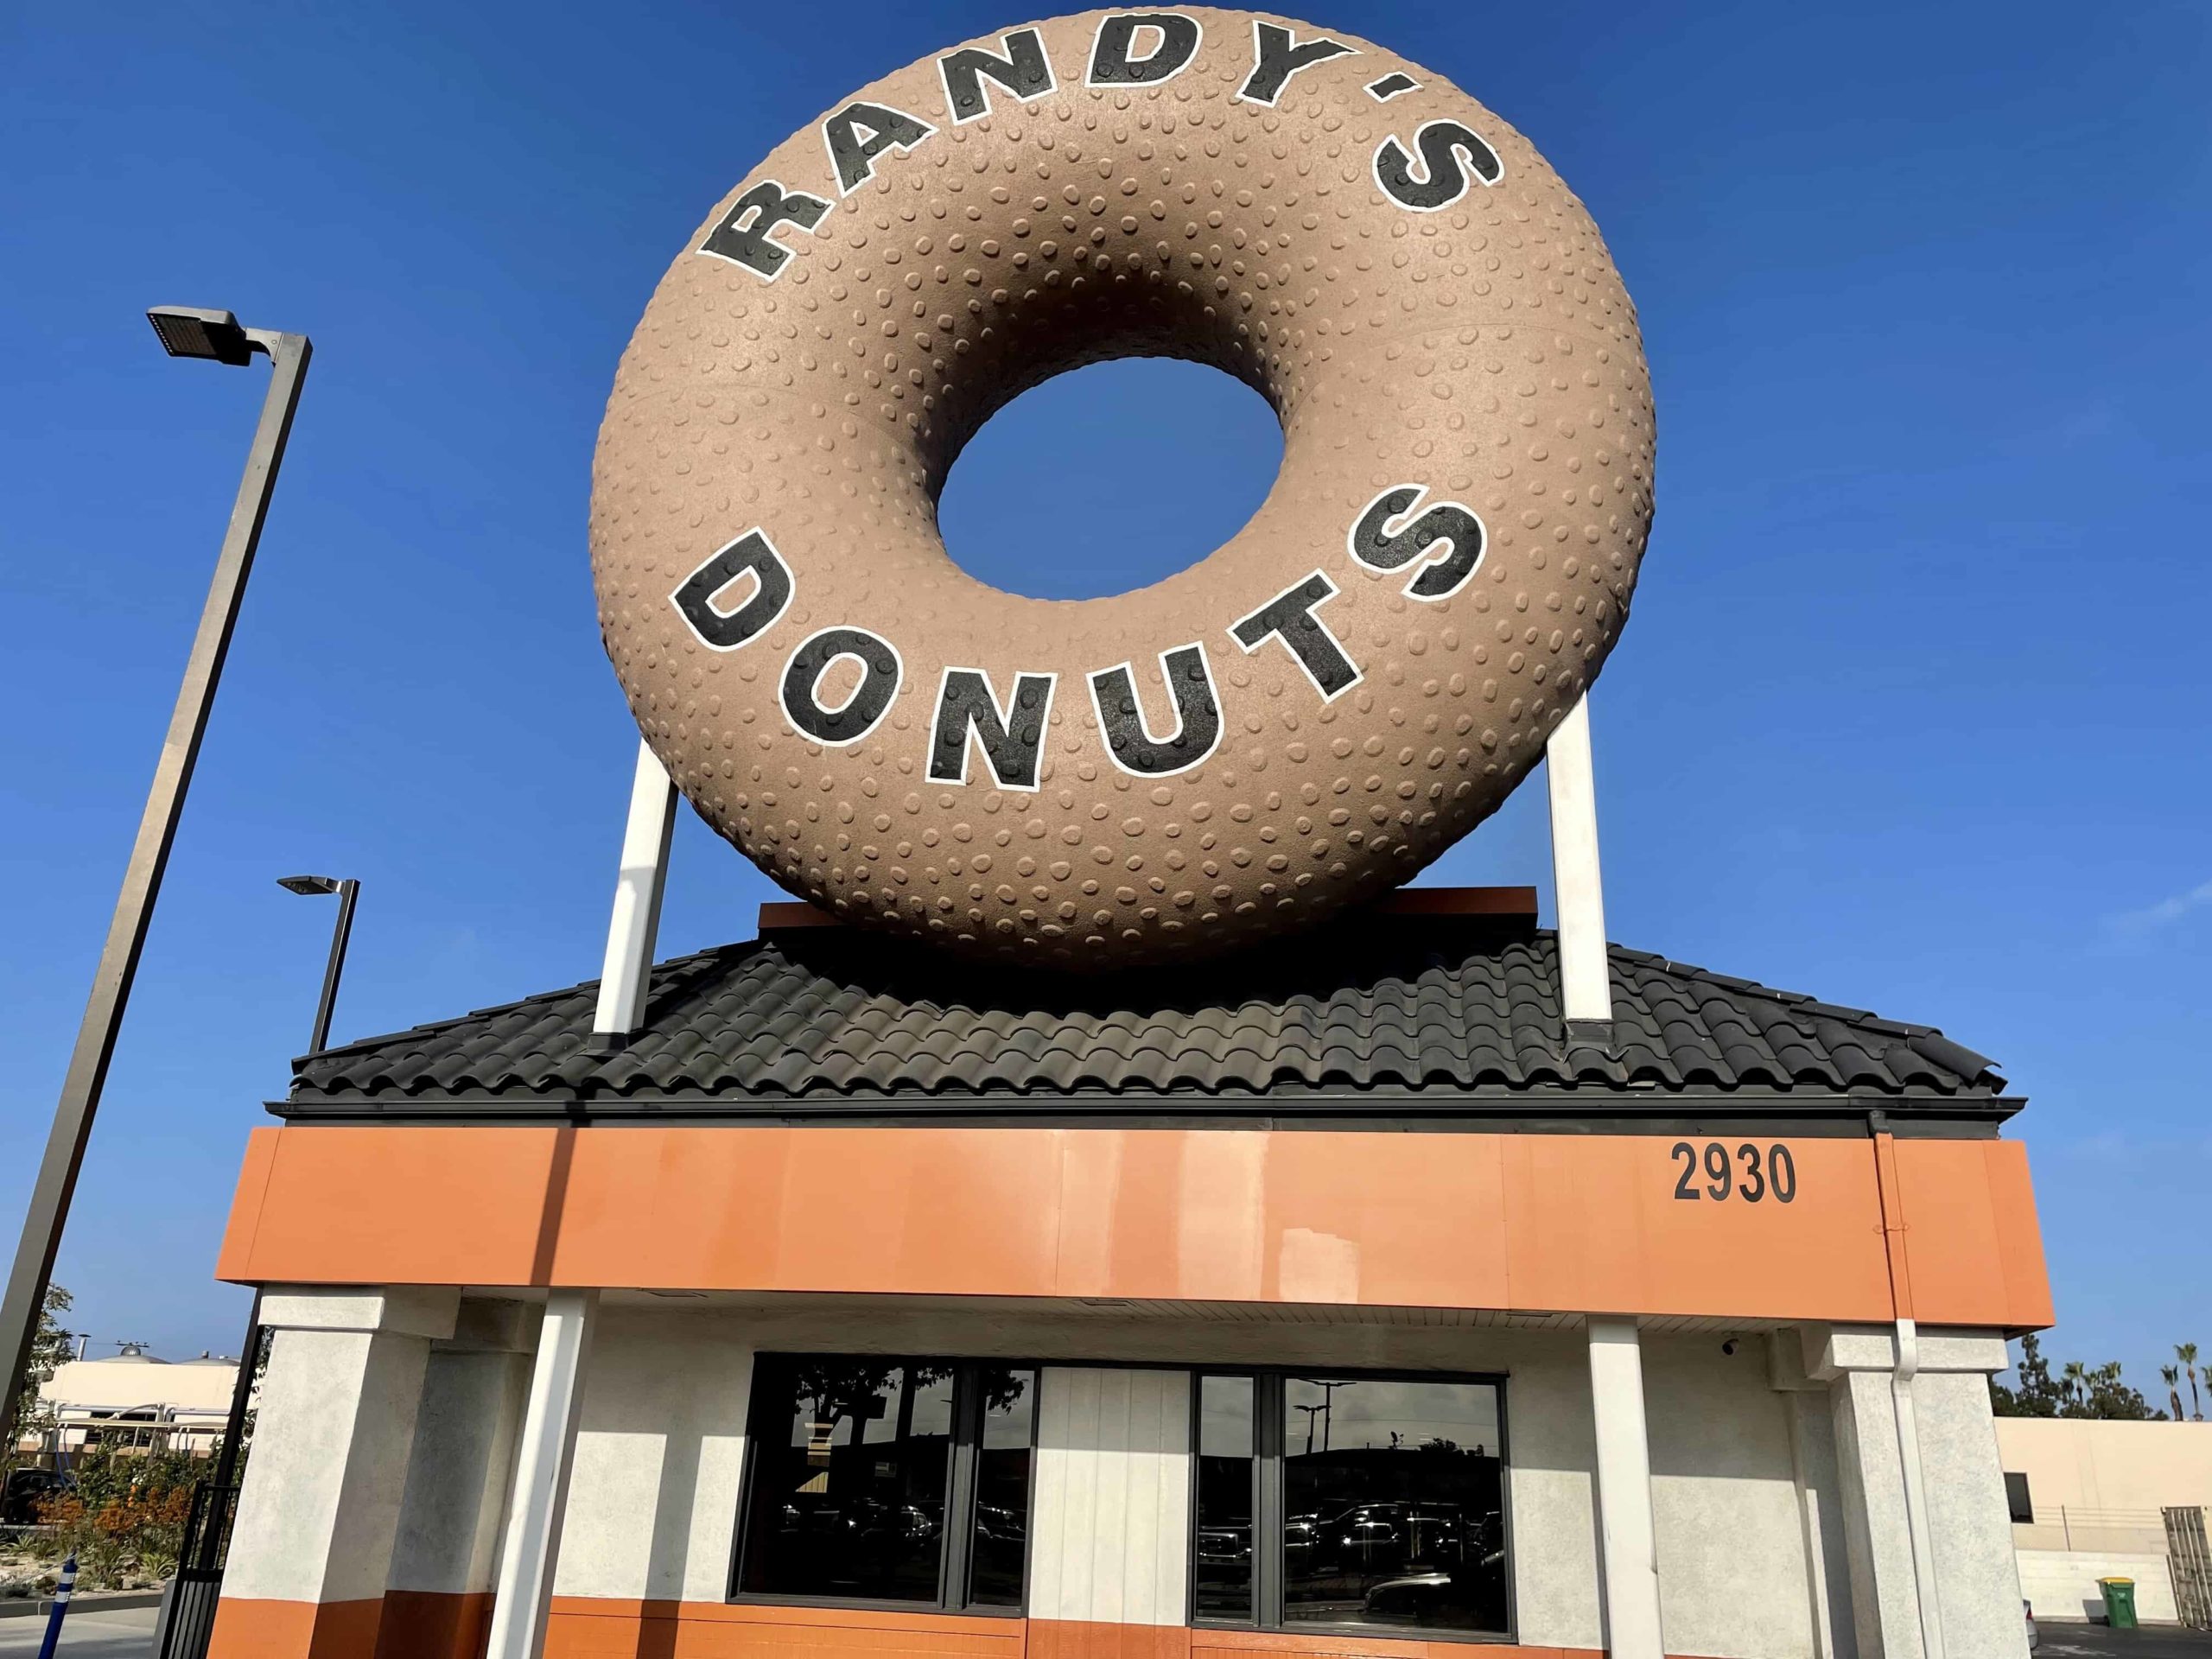 Randy's Donuts, Costa Mesa